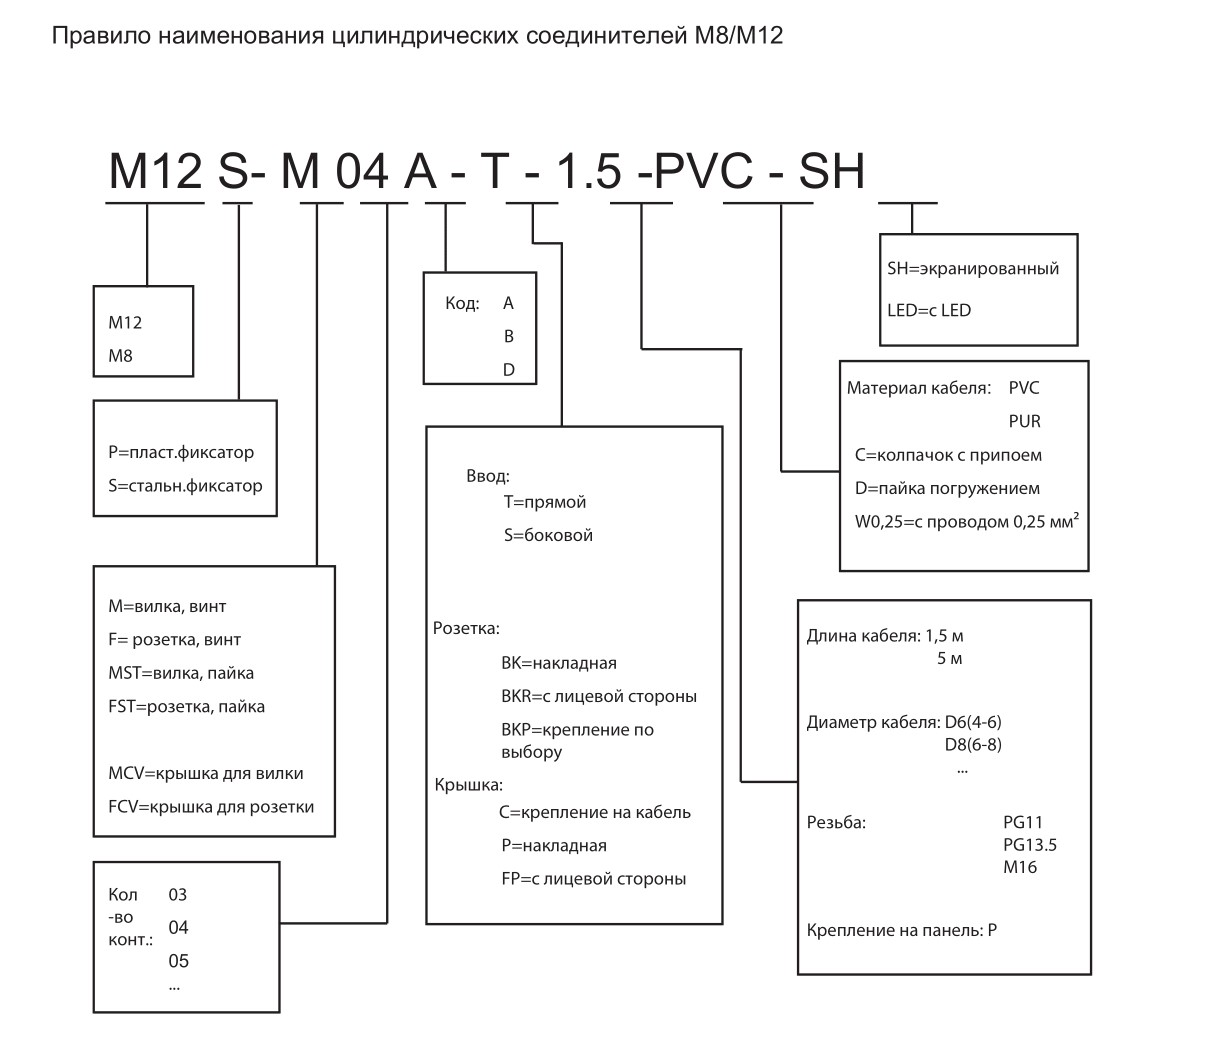 Цилиндрический соединитель-вилка с кабелем M12-M04D-BKR-M16-14.0-PUR-PFN 1630043014026: Структура обозначения